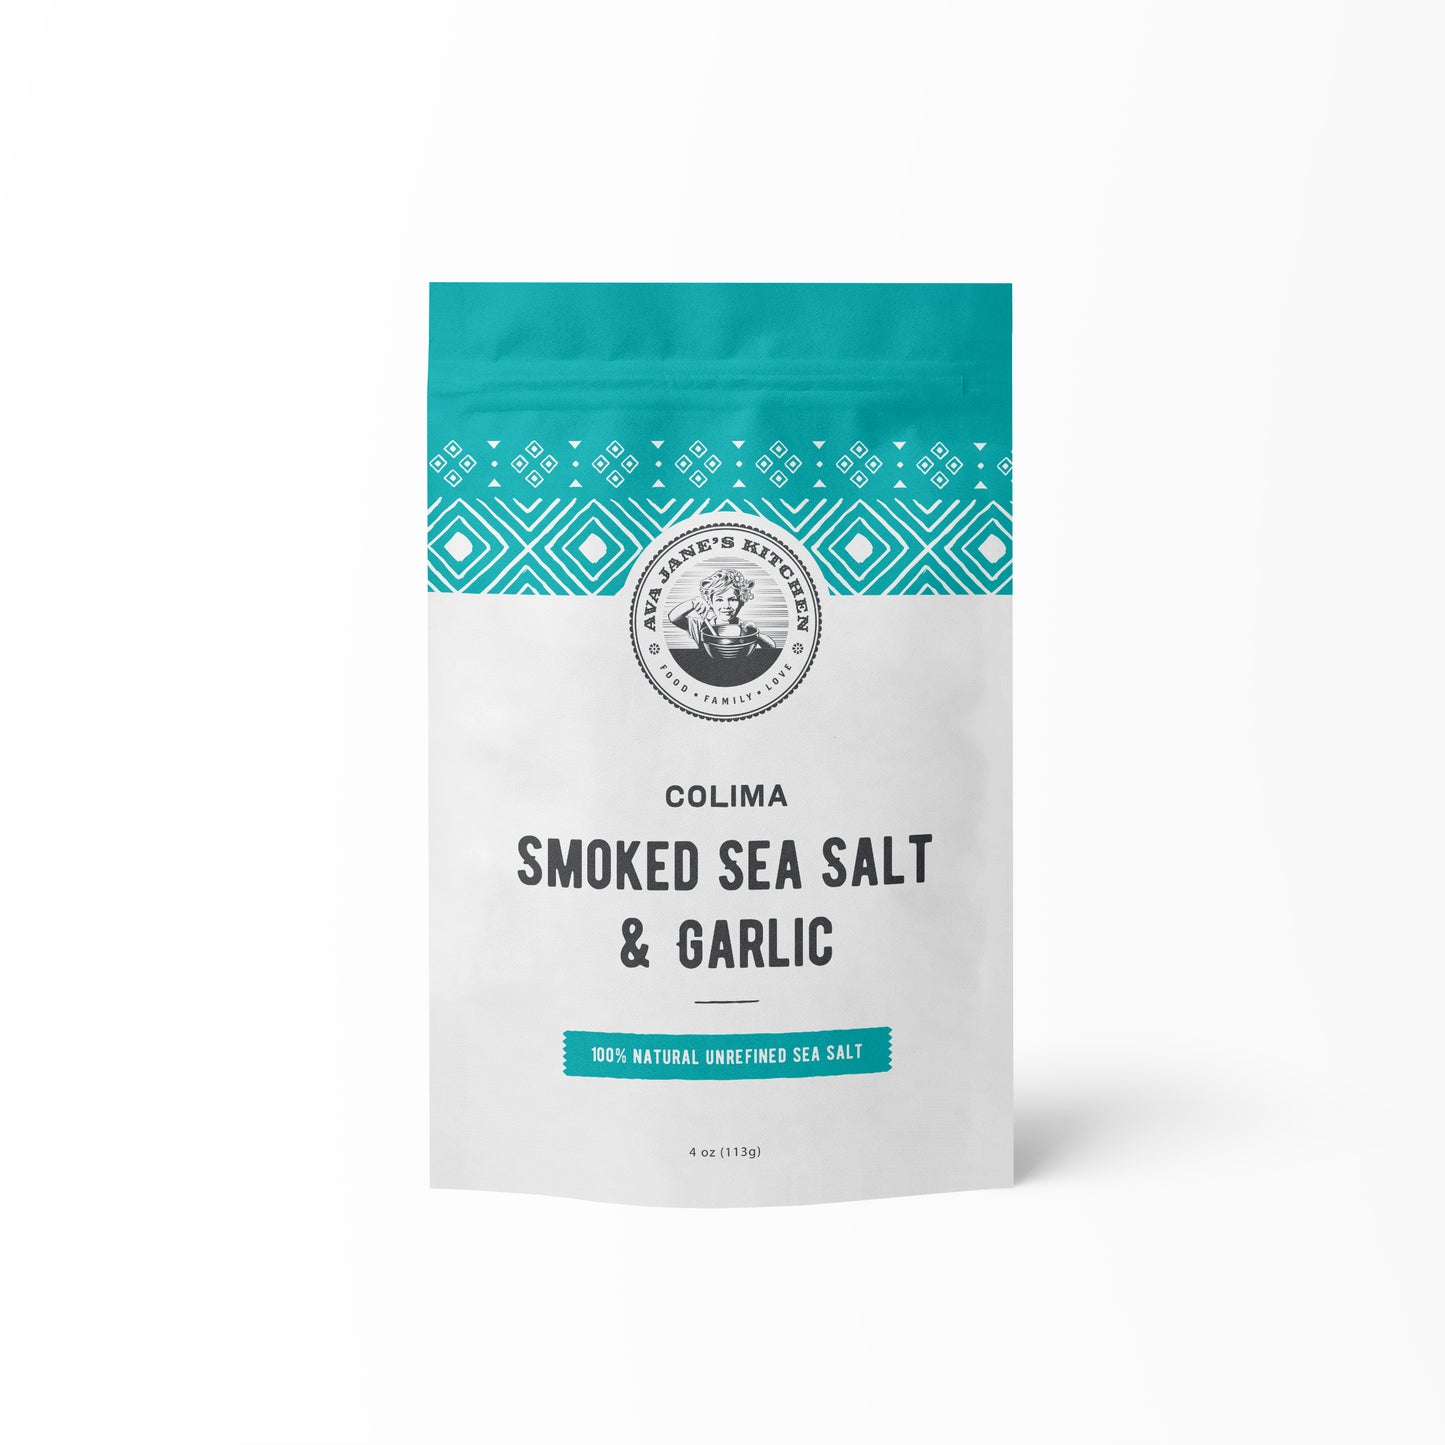 Ava Jane Kitchen Flavored Salt Bundle, one bag of the smoked sea salt and garlic variety